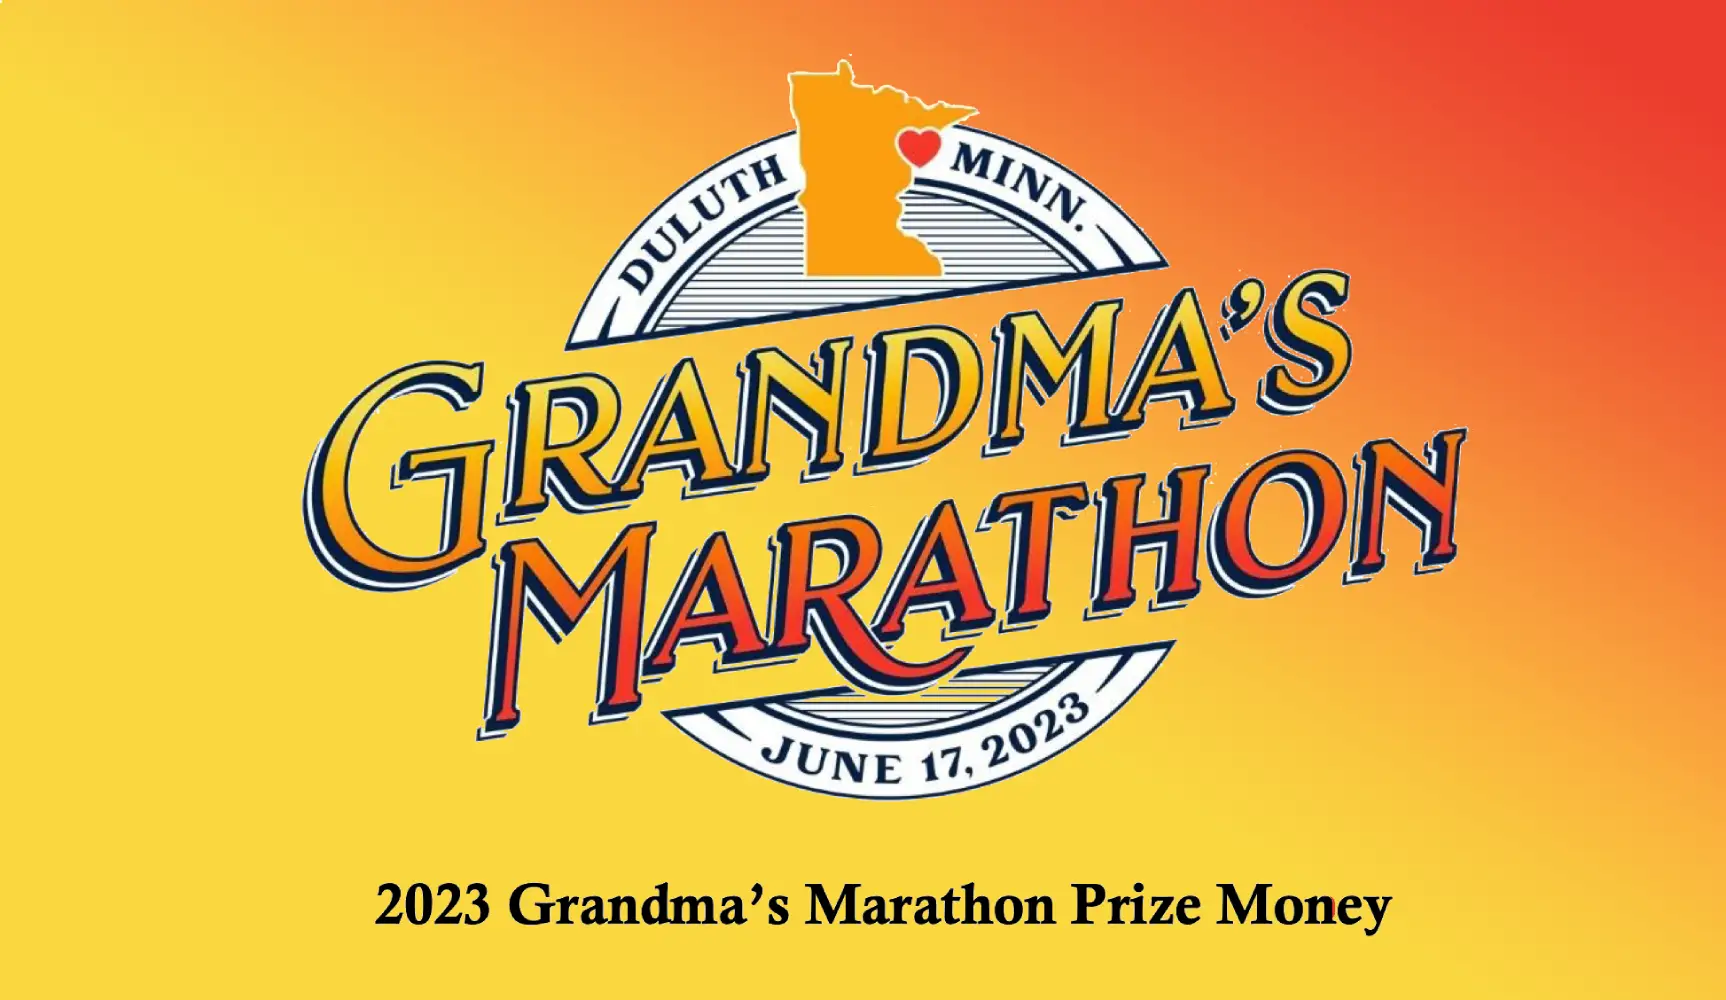 Prize Money for 2023 Grandma’s Marathon